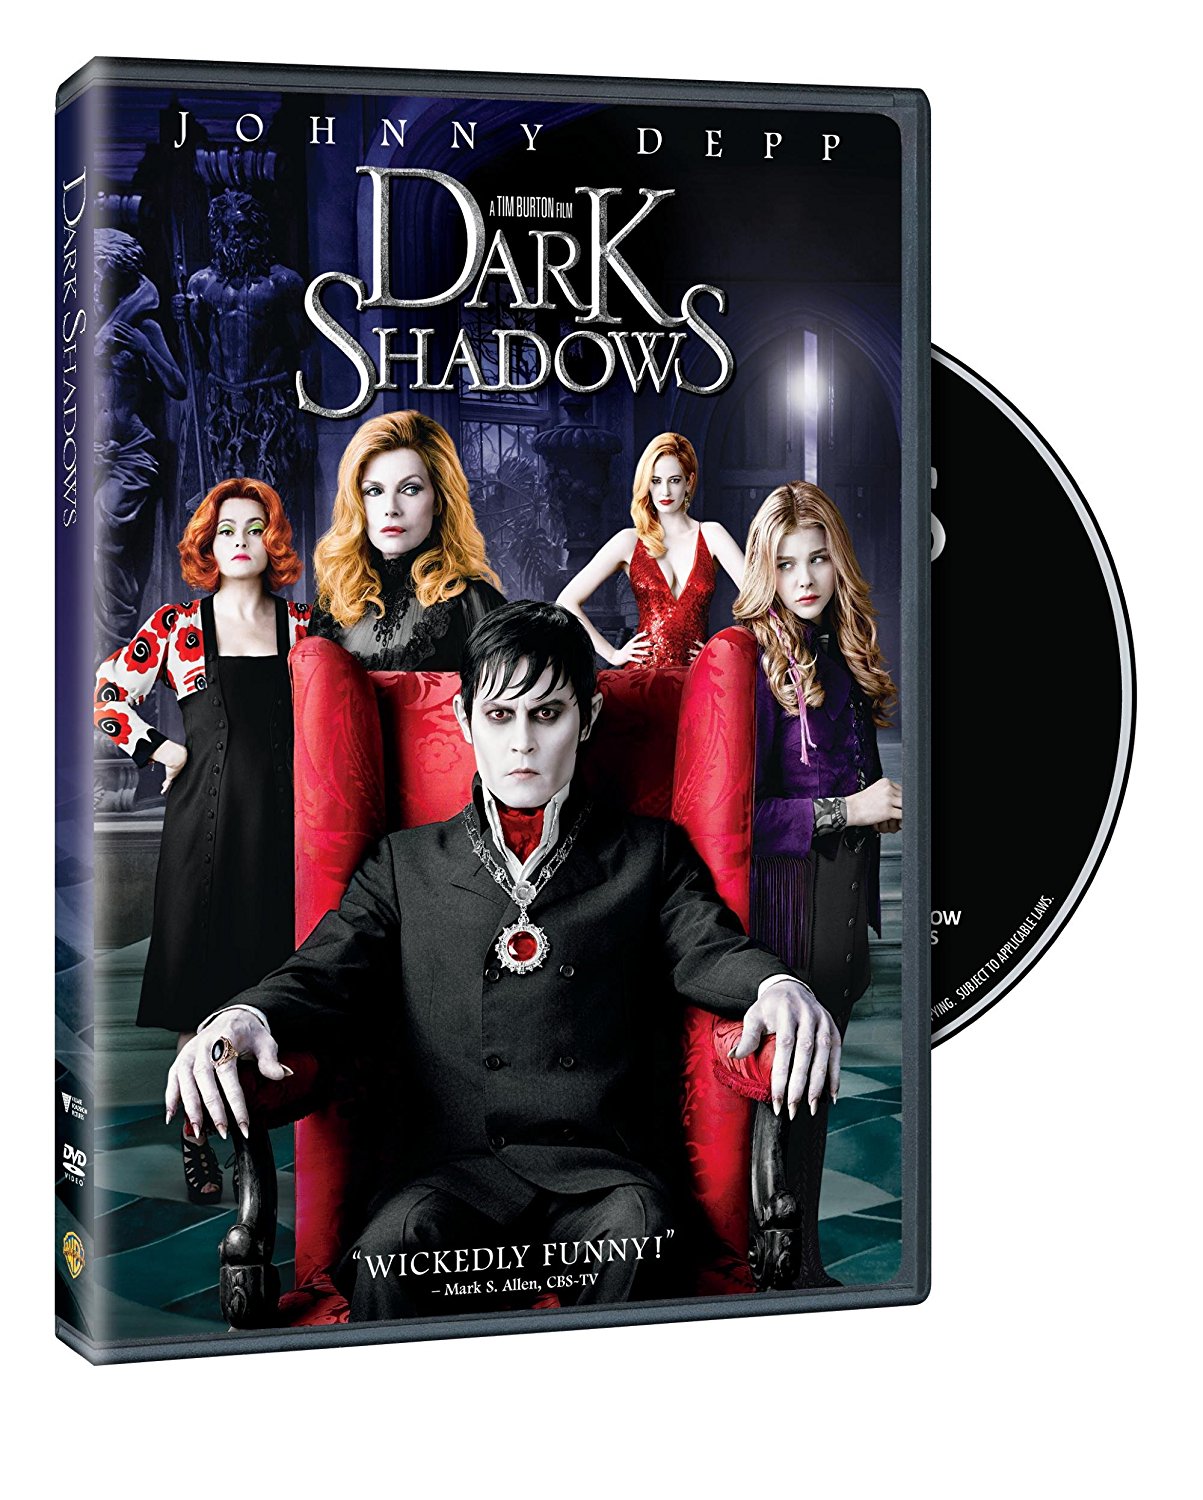 Dark Shadows on DVD – Just $3.74!